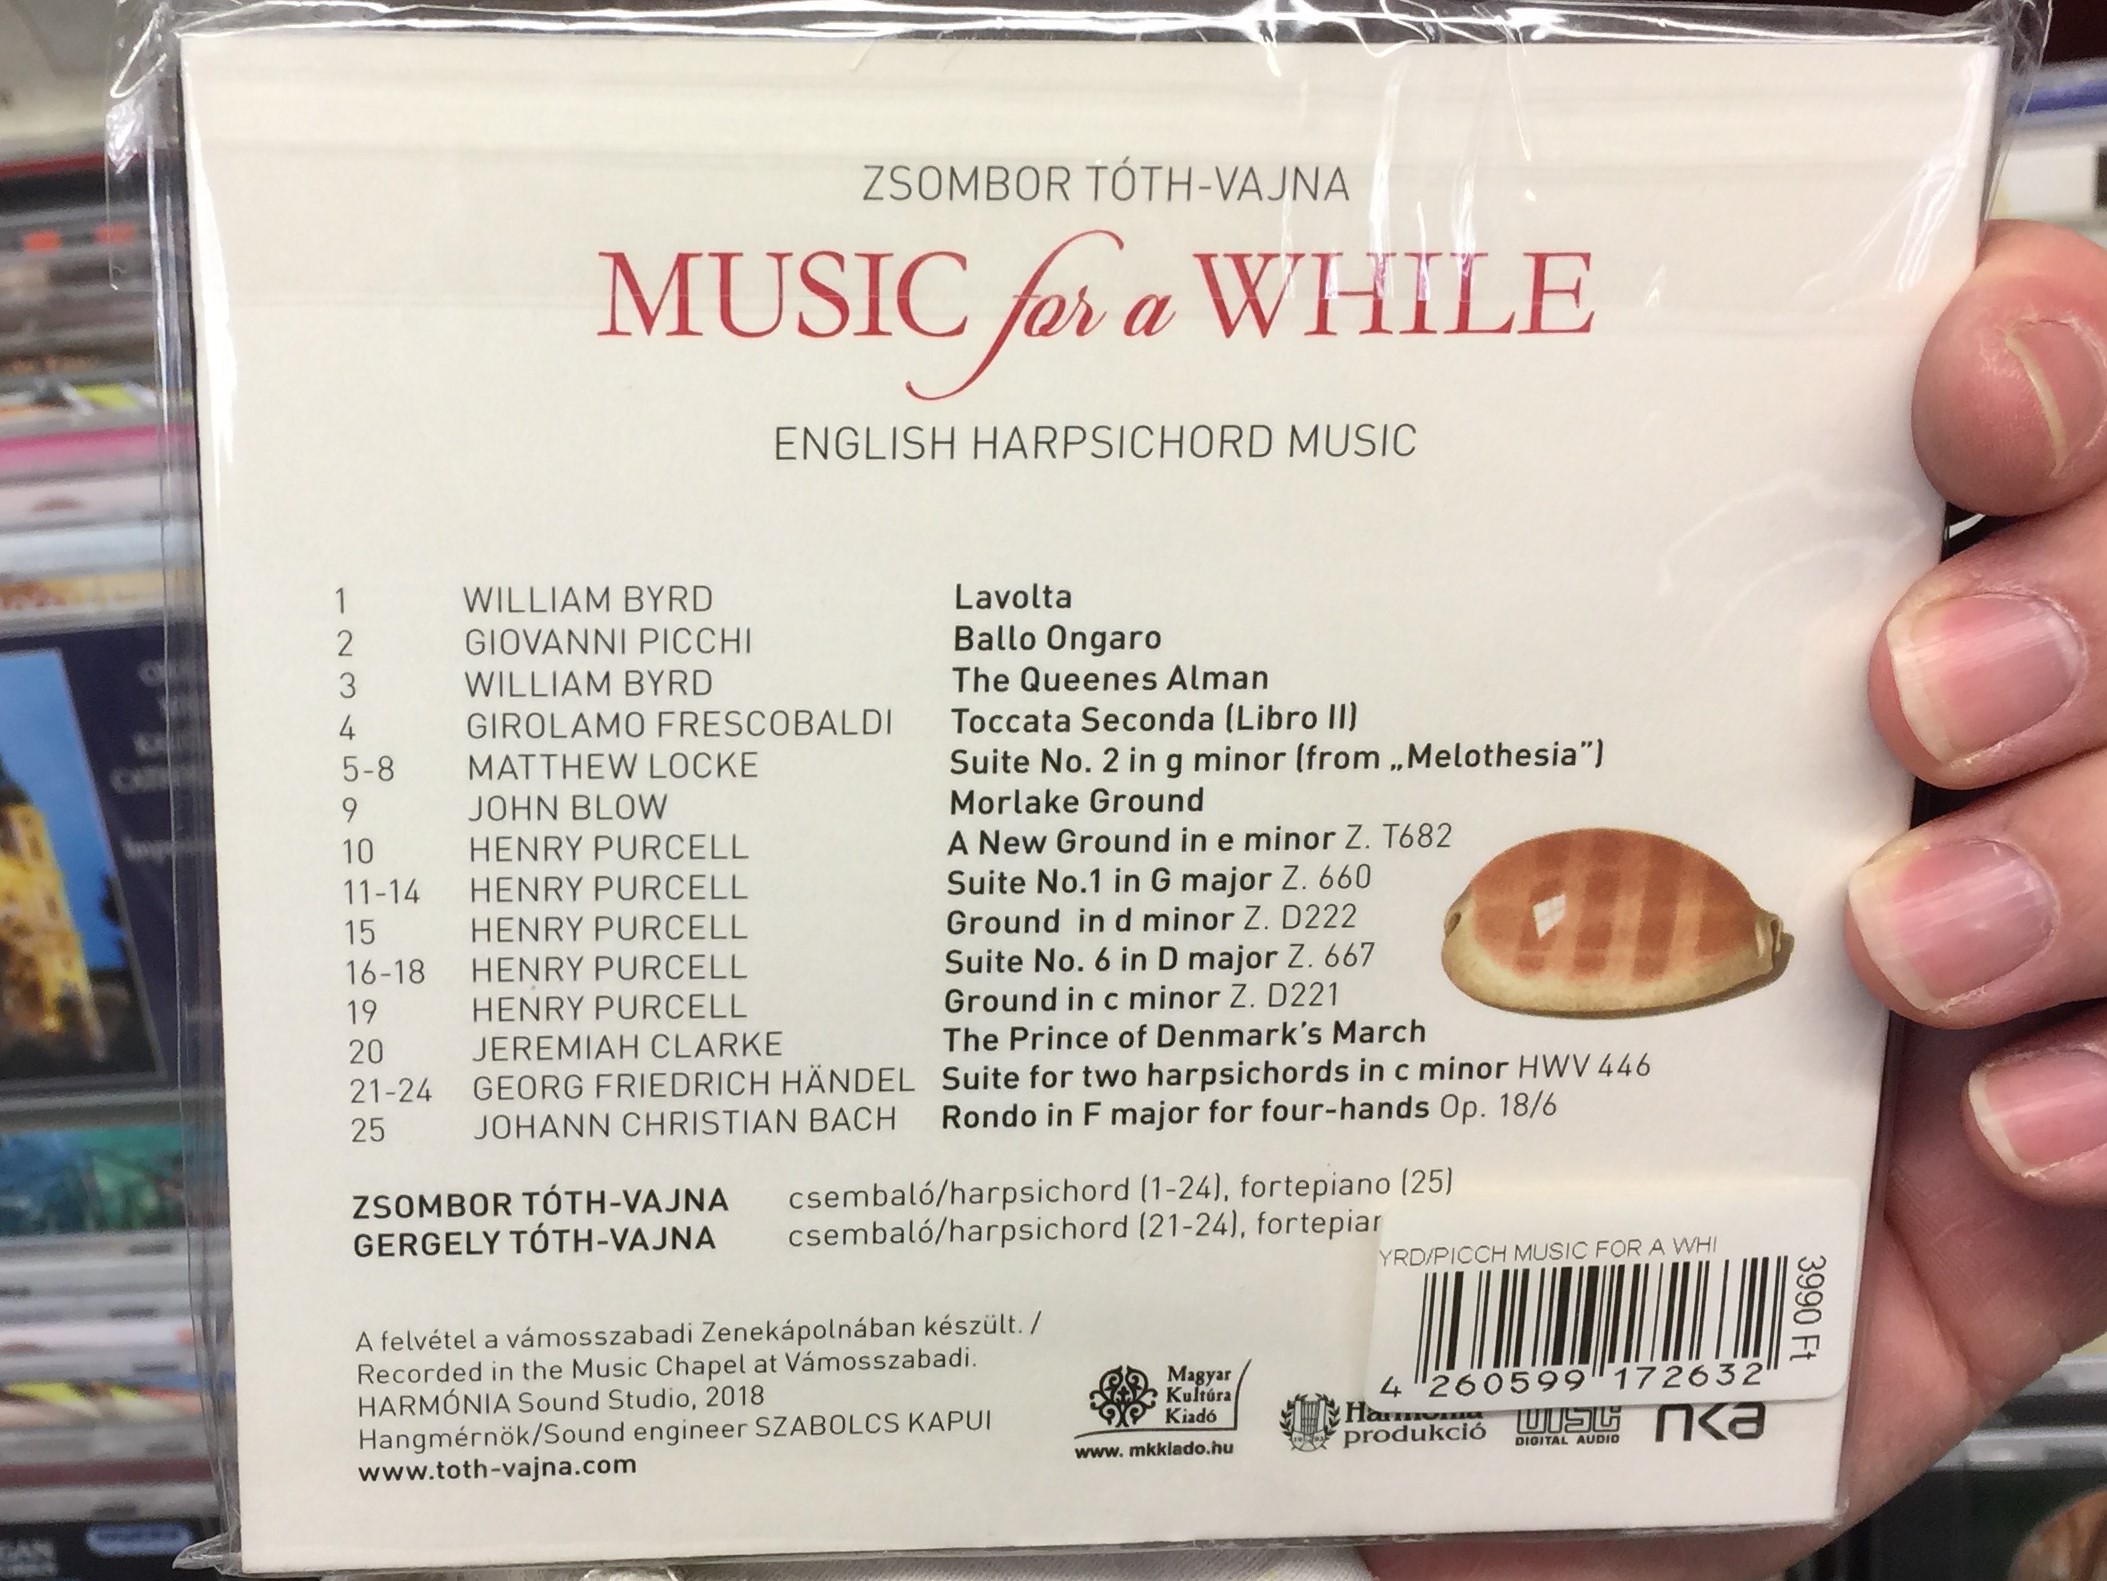 zsombor-toth-vajna-music-for-a-while-english-harpsichord-music-magyar-kultura-kiado-audio-cd-2018-4260599172632-2-.jpg